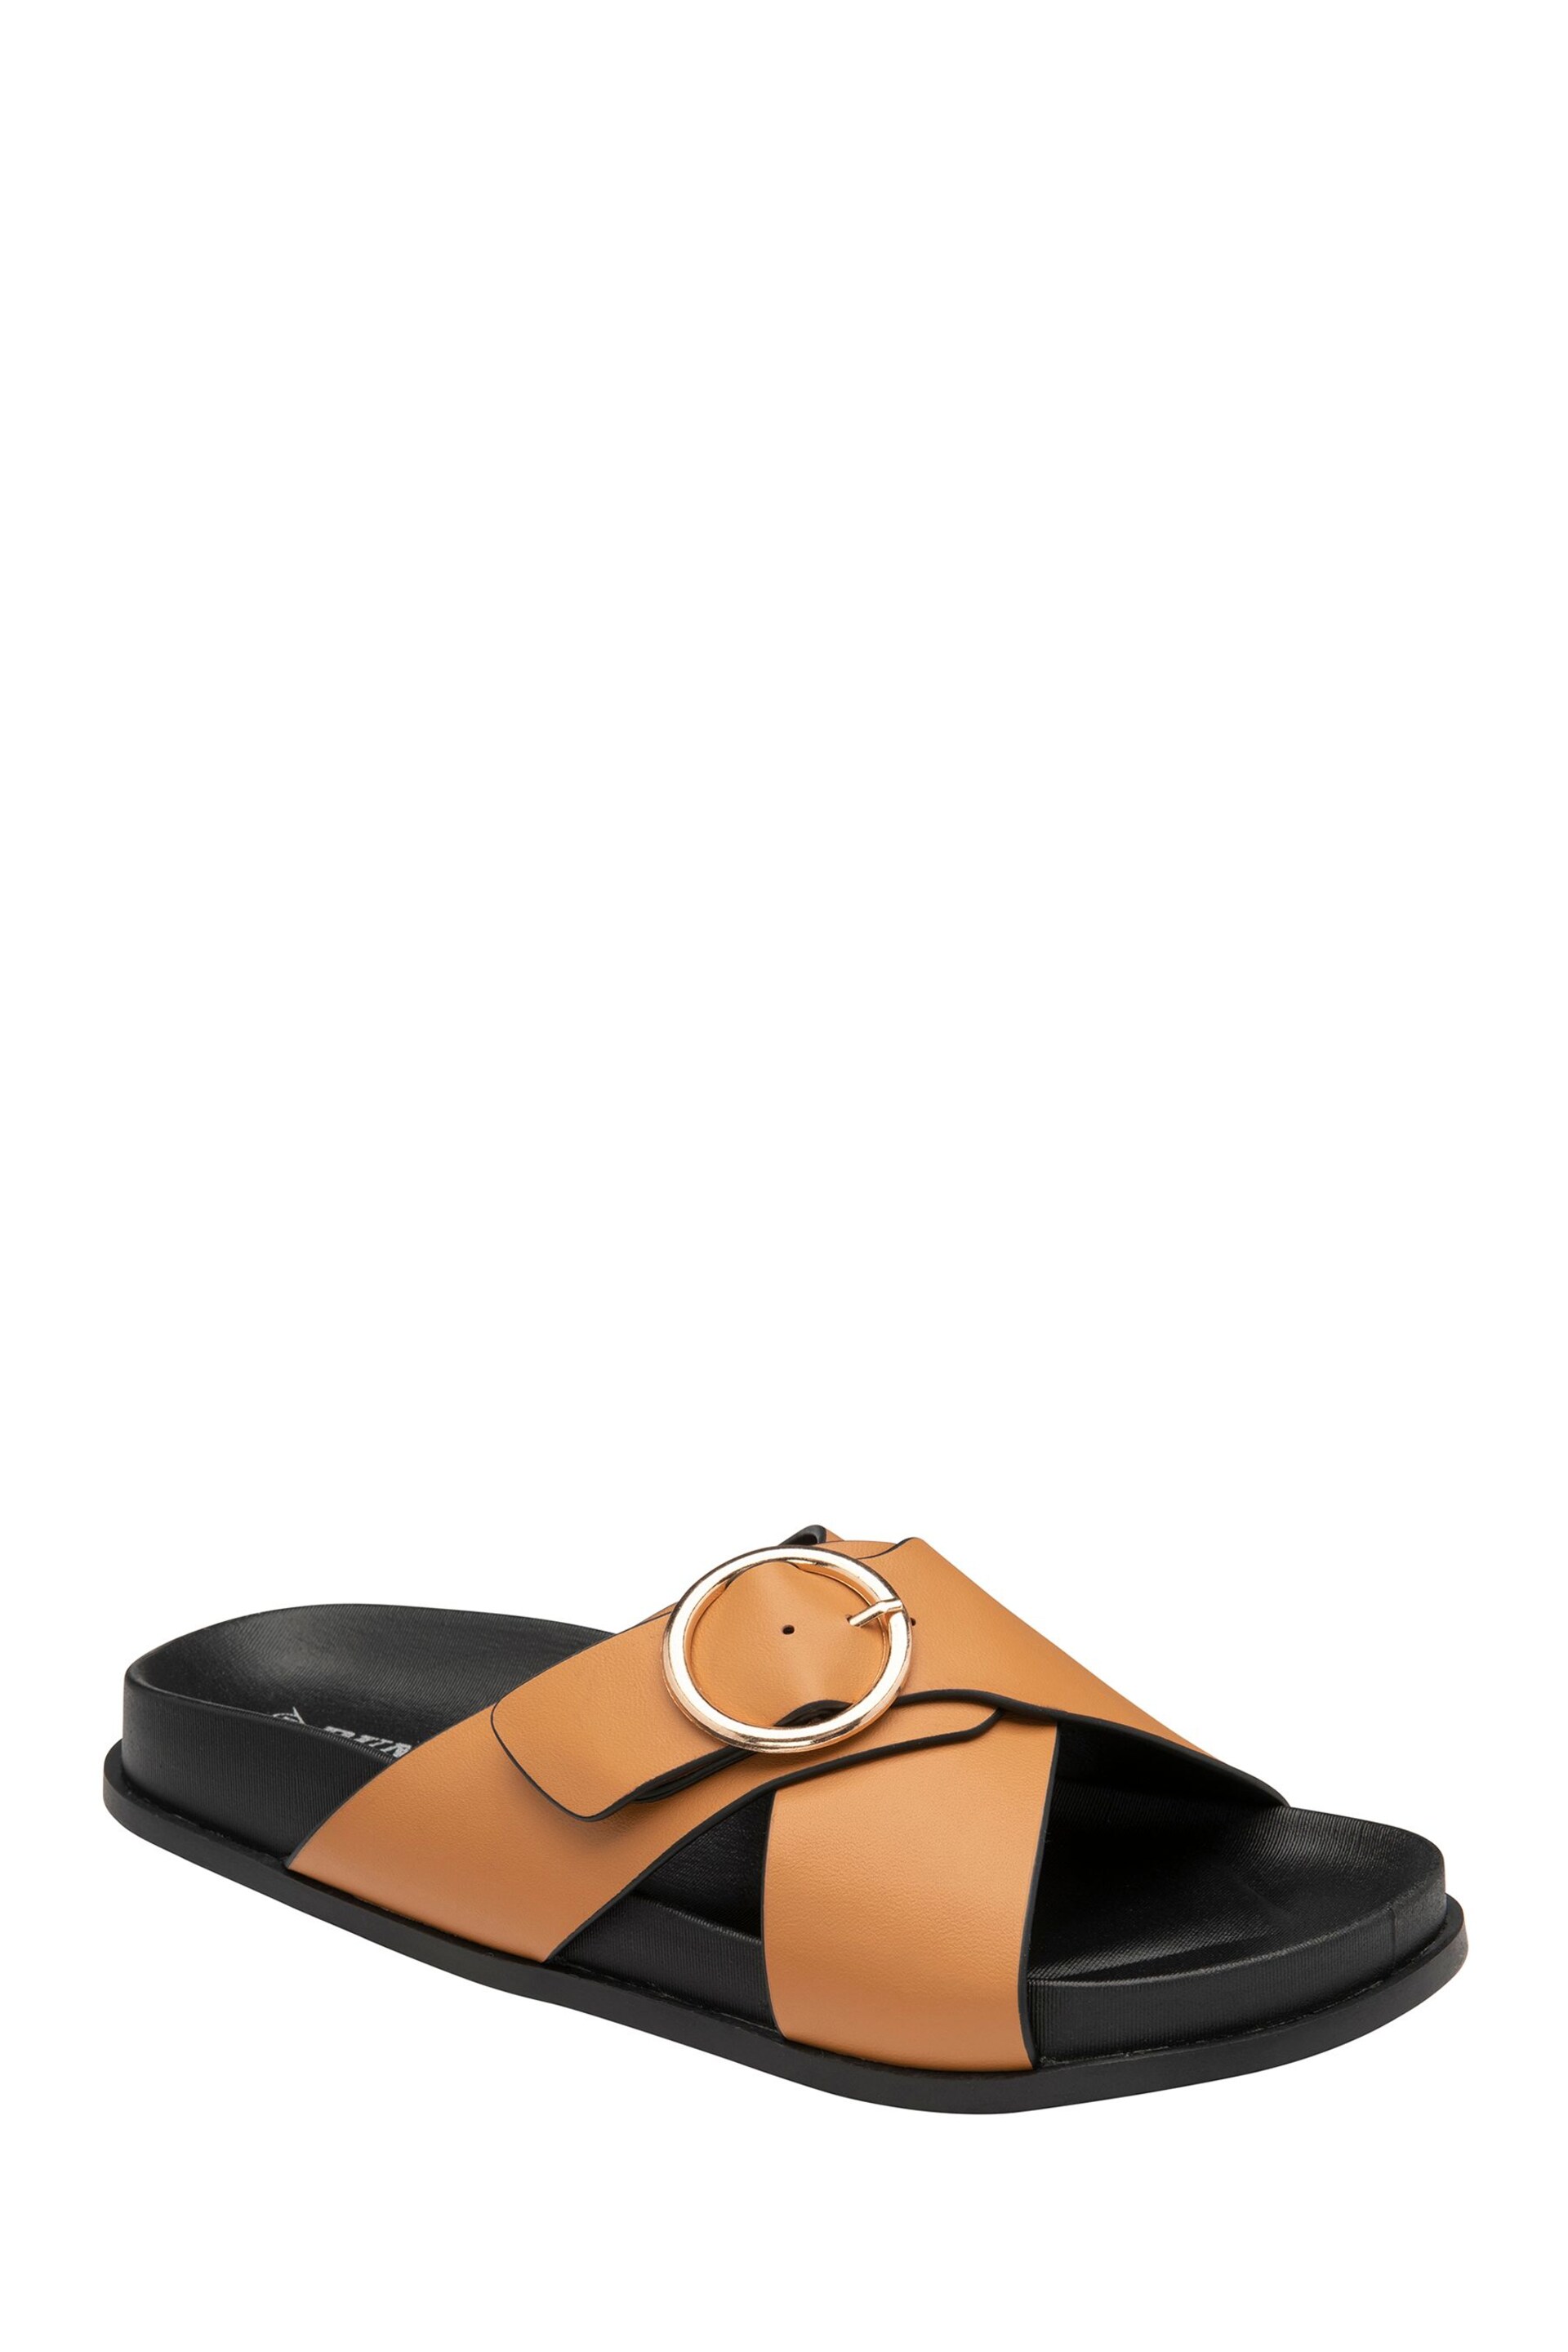 Dunlop Brown Open-Toe Mule Sandals - Image 1 of 4